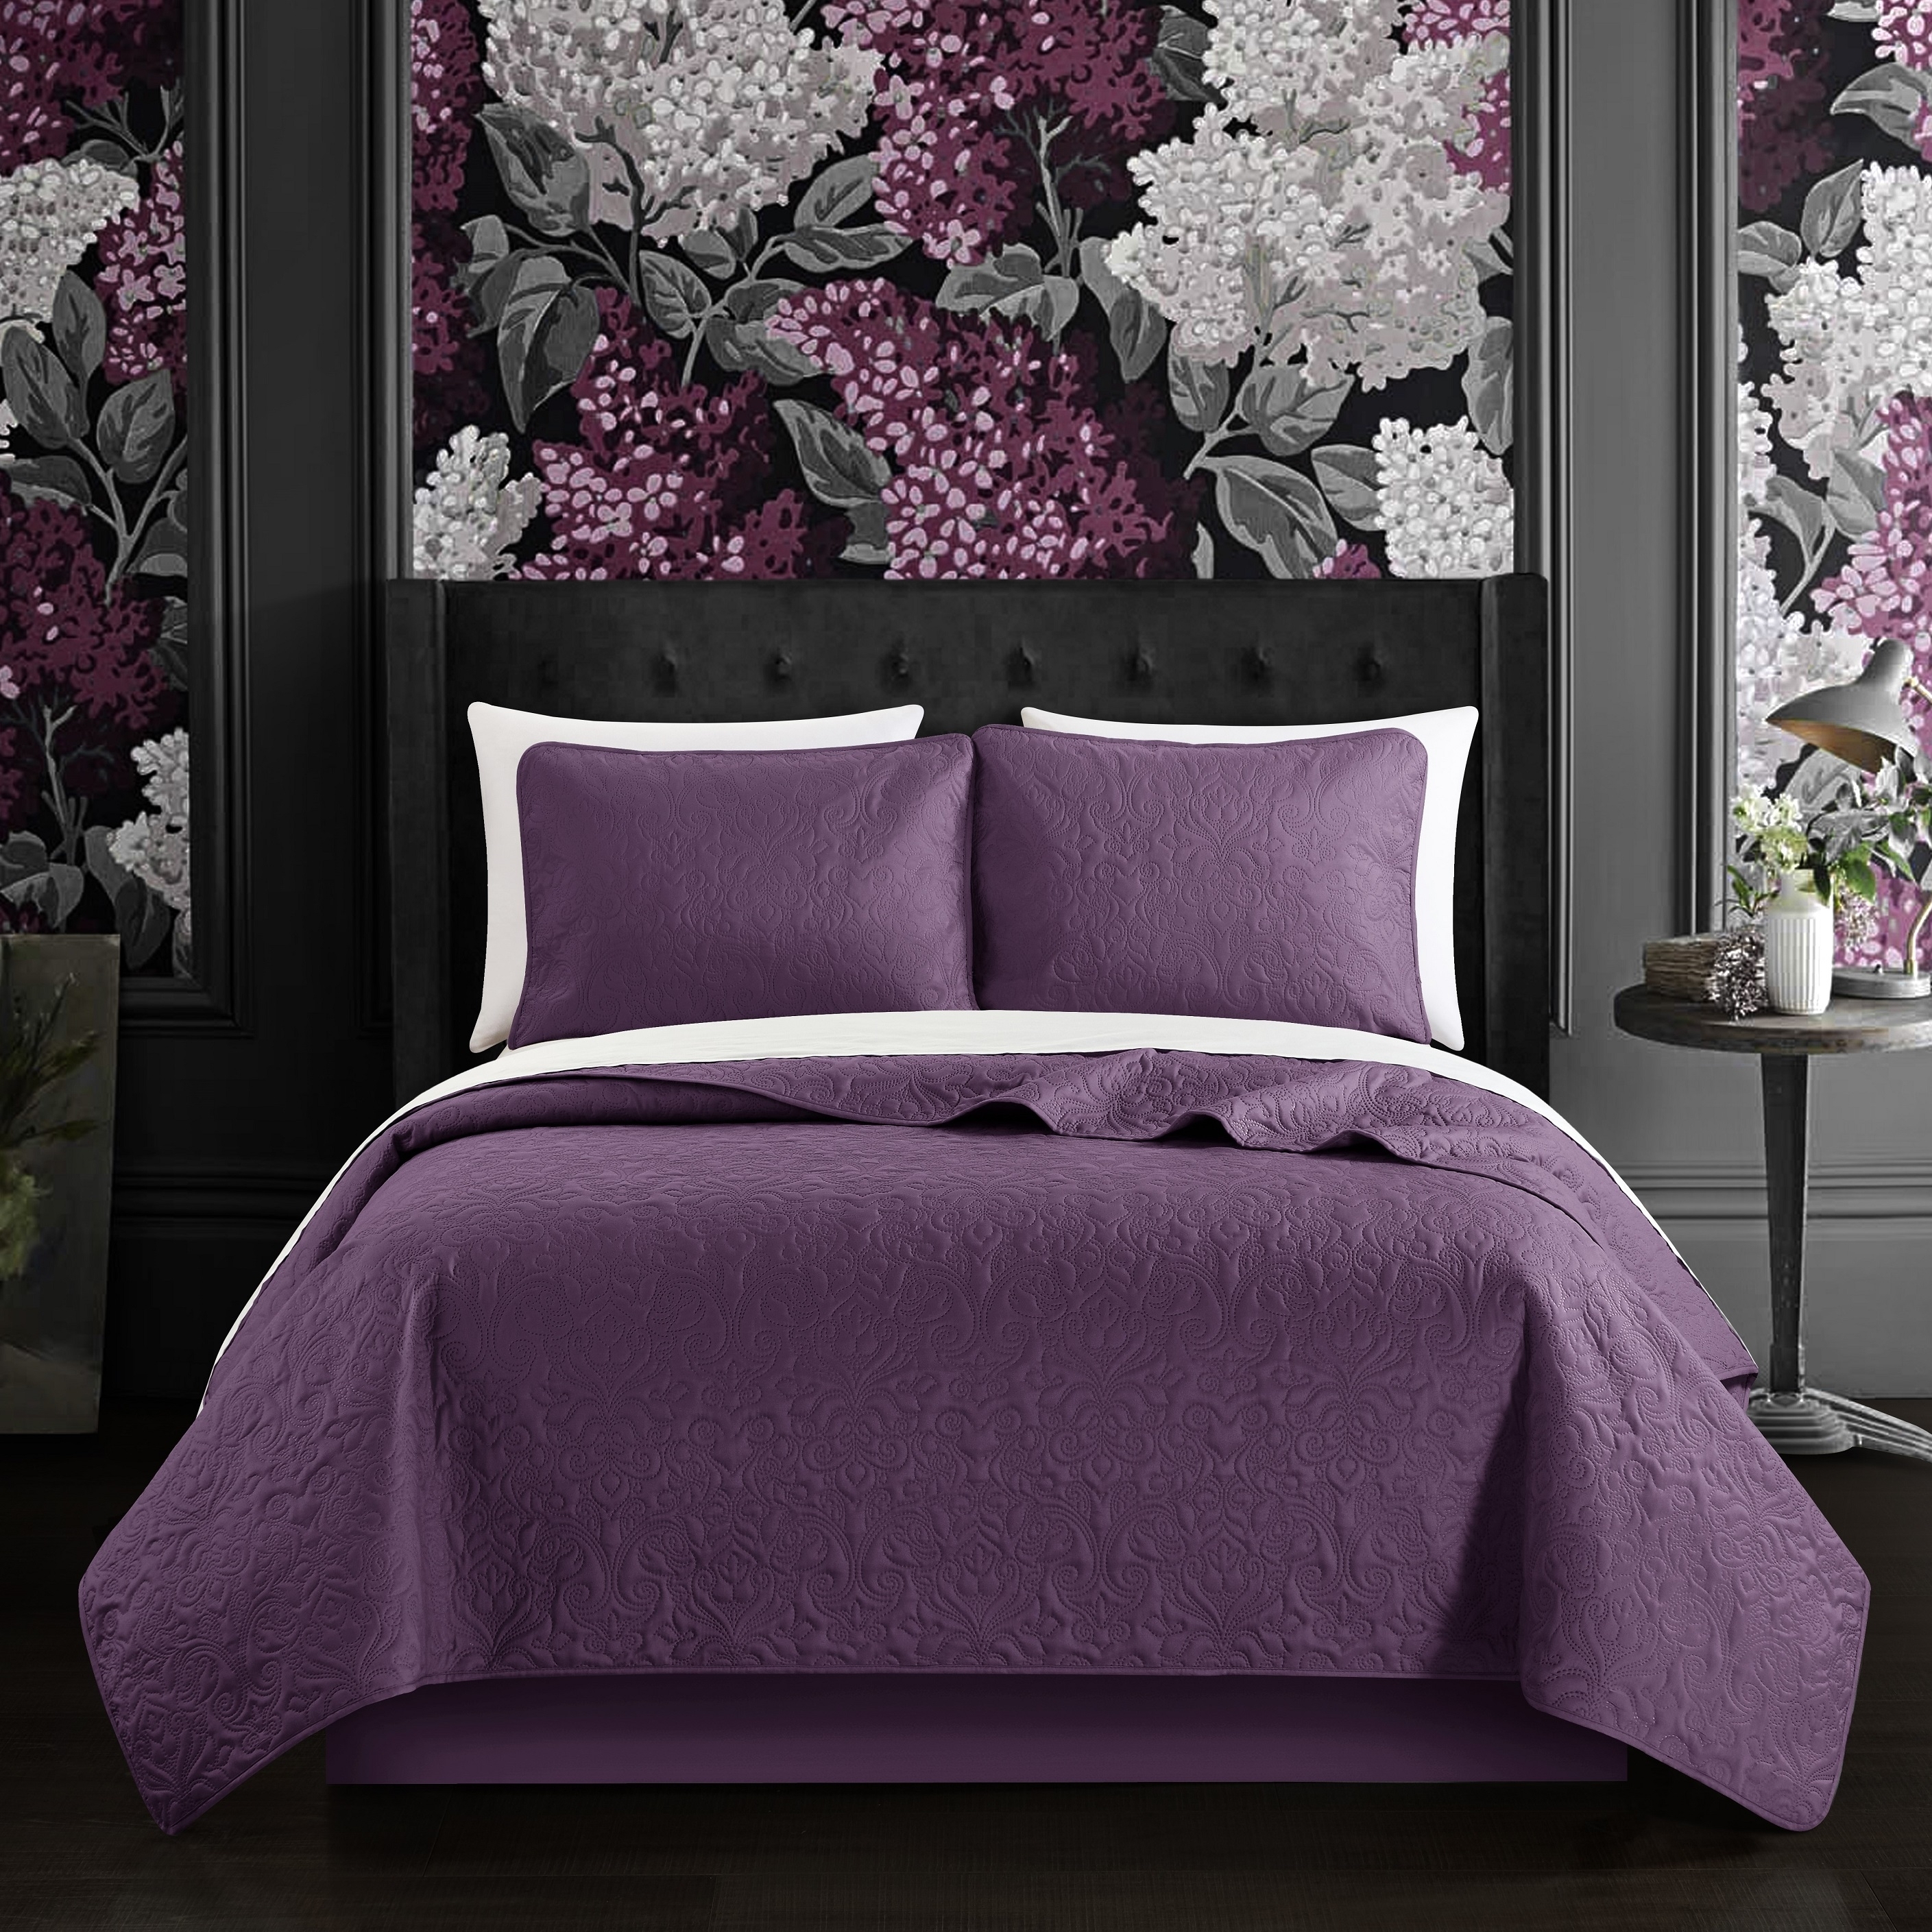 Milli 3 Or 2 Piece Quilt Set Floral Scroll Pattern Design Bedding - Purple, Twin - 2 Piece